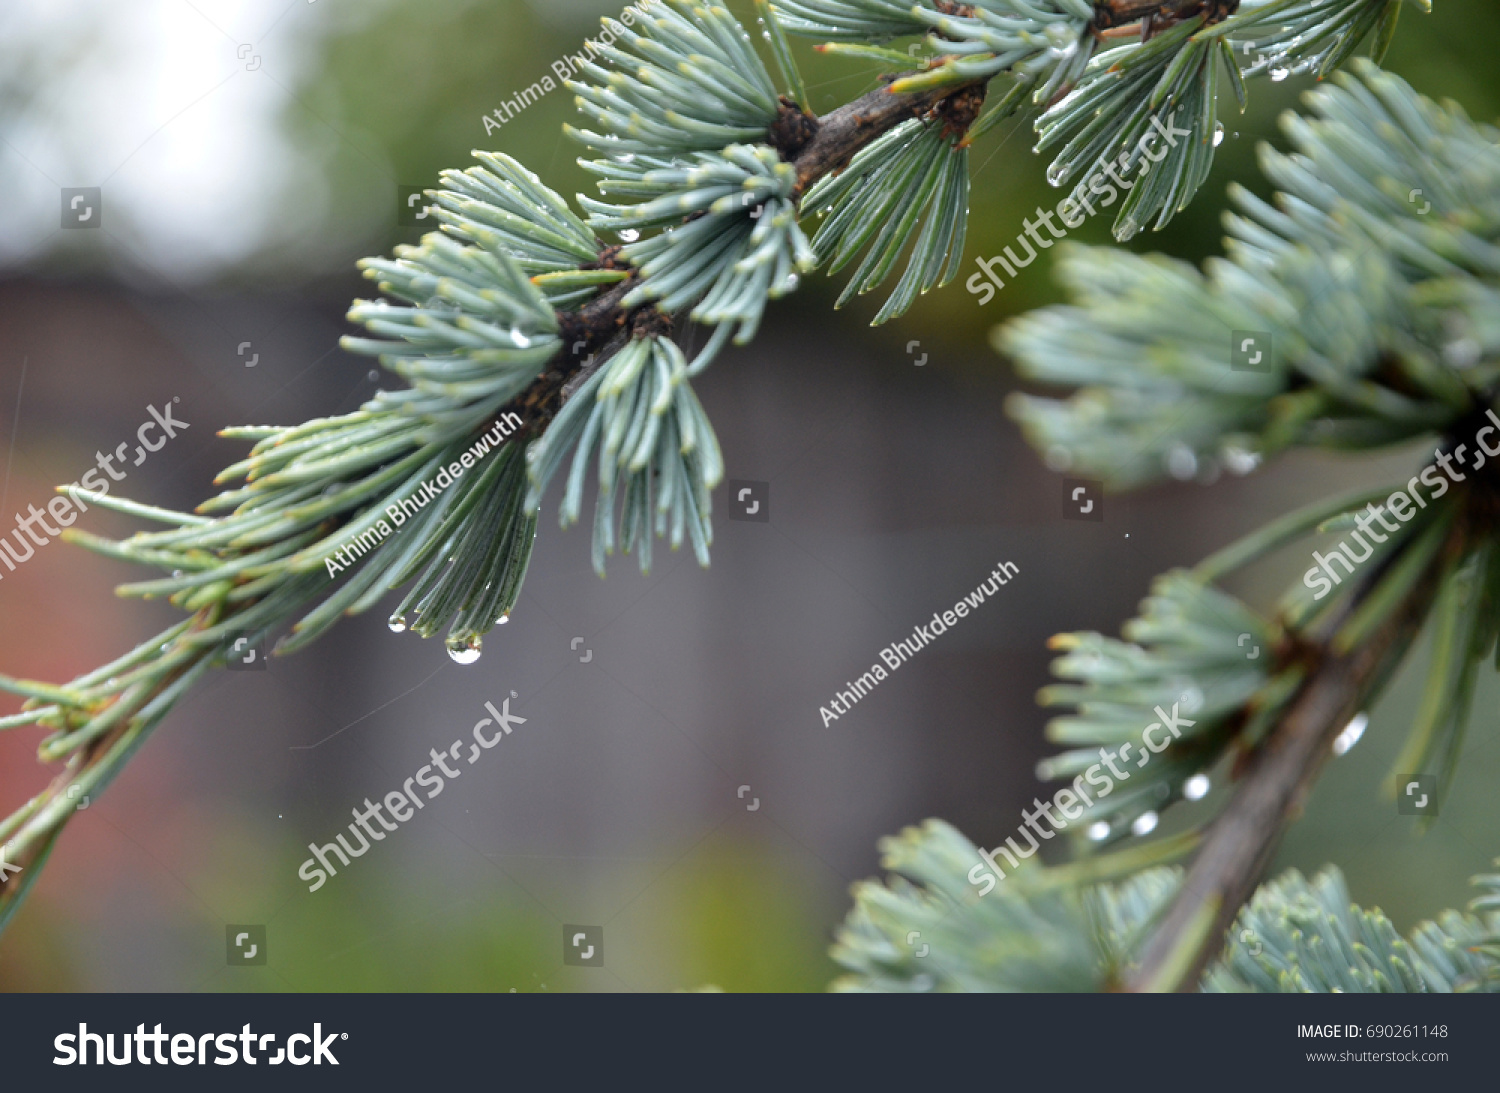 White fir with water drop after rain, close up shot, USA #690261148